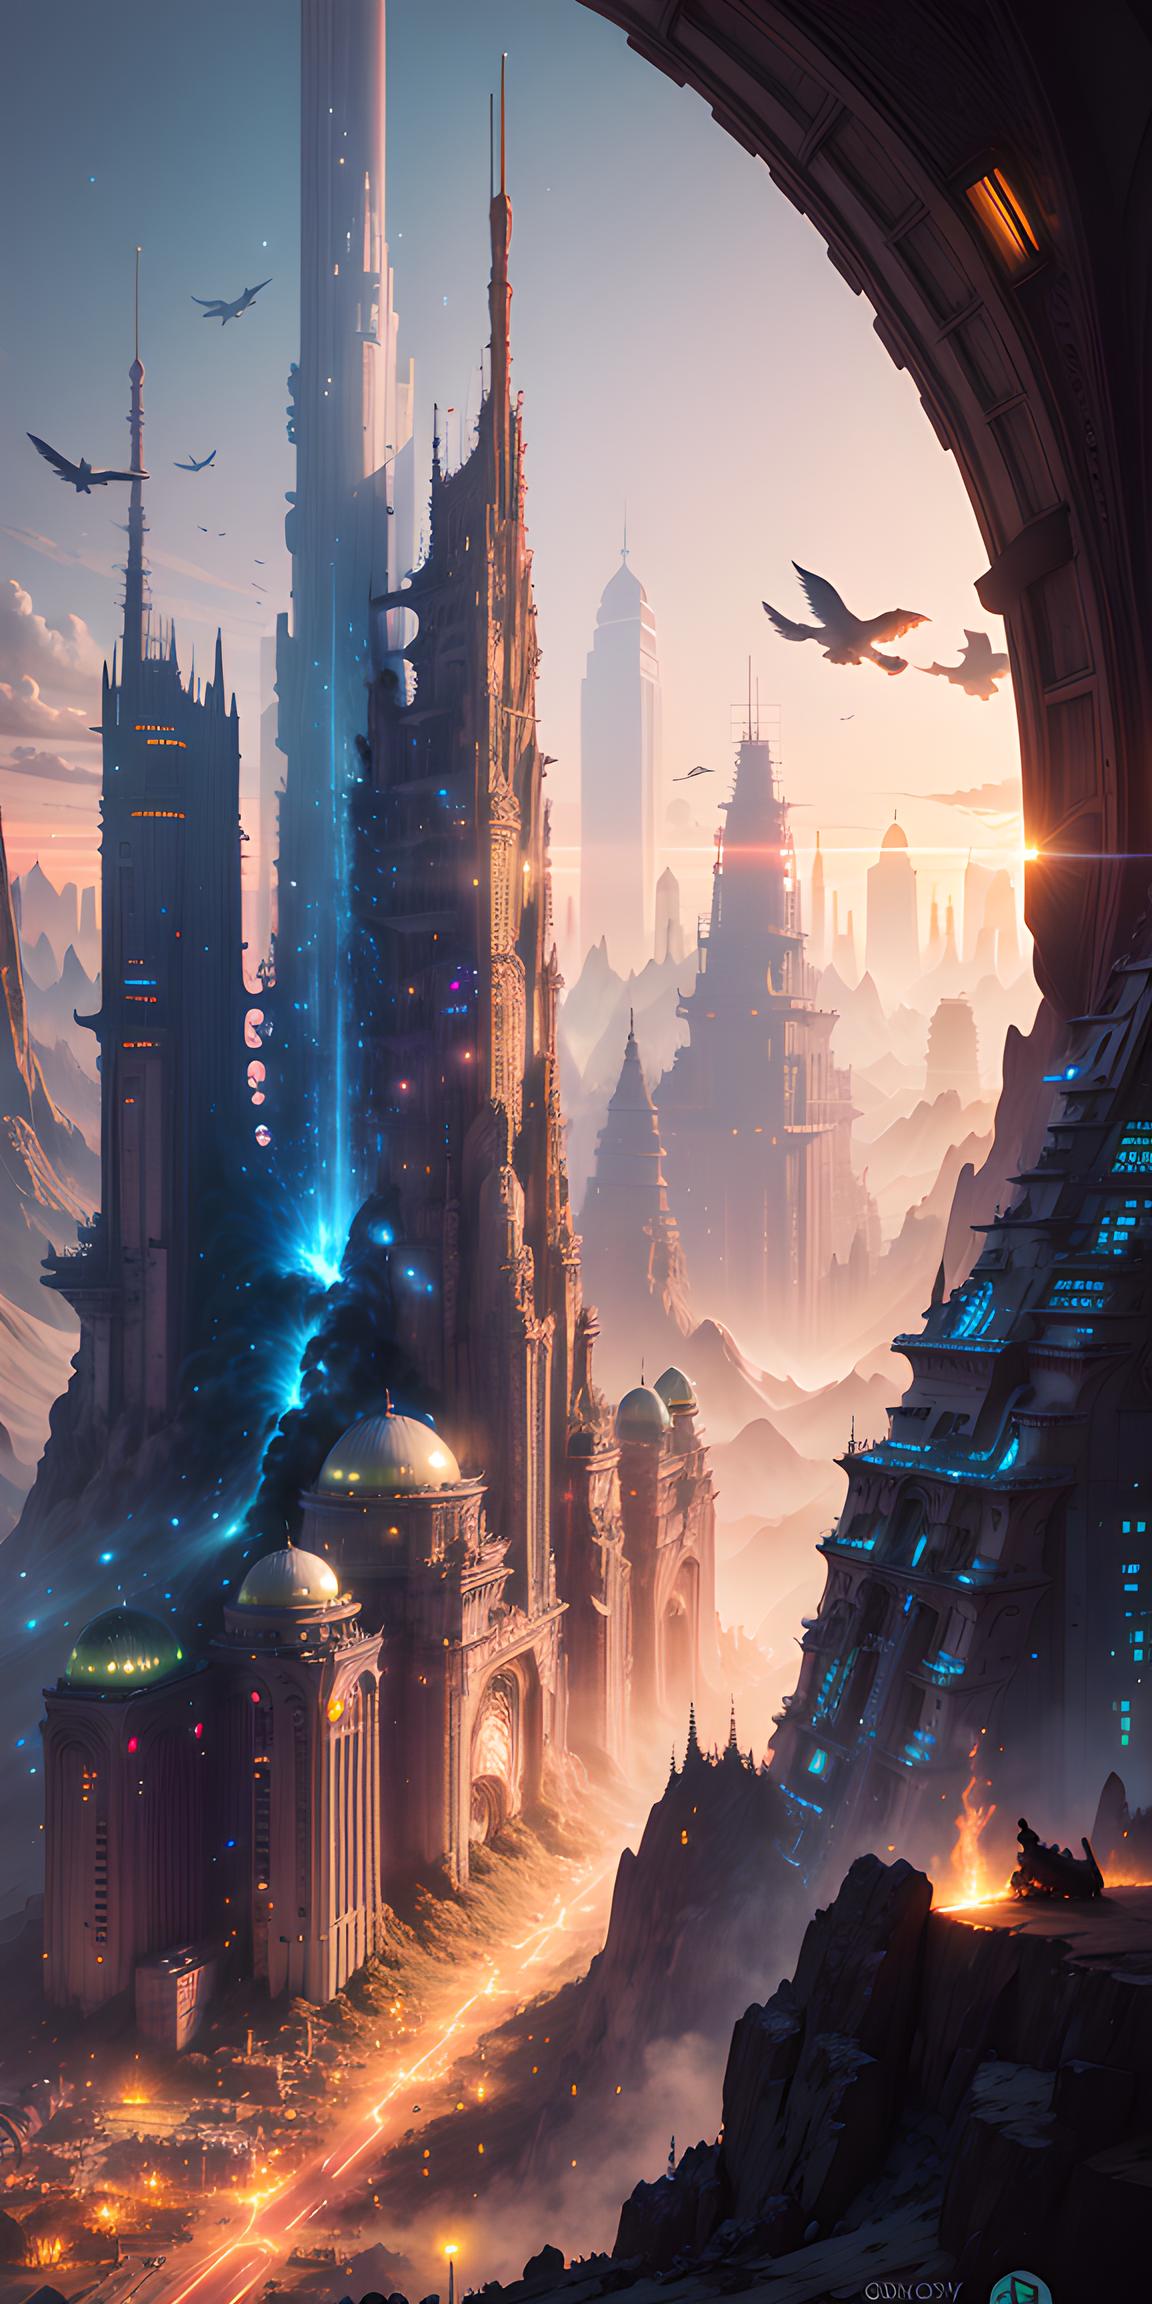 Space City 